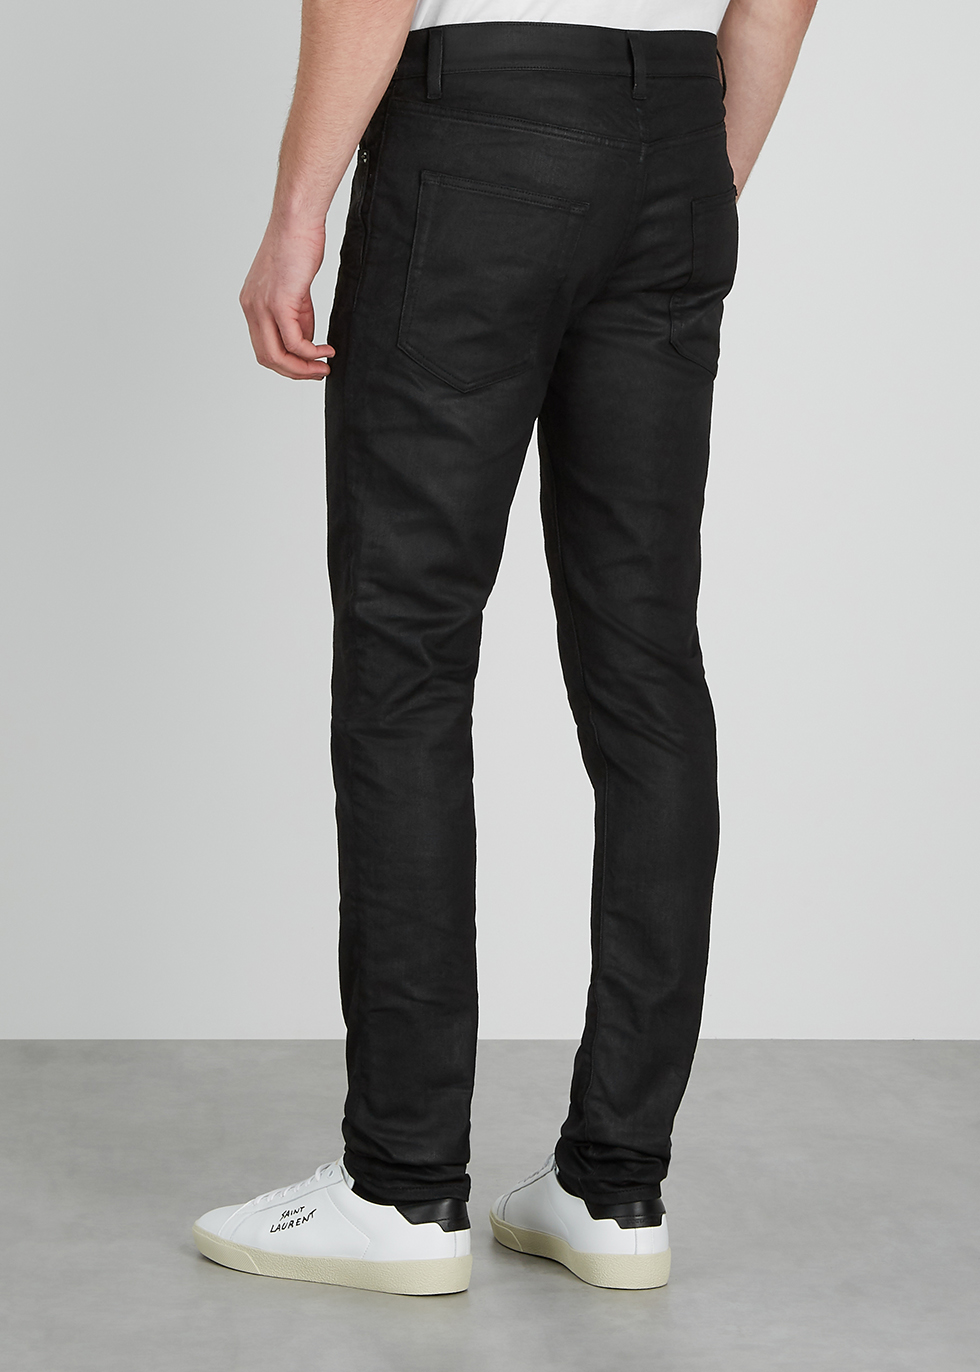 black coated pants